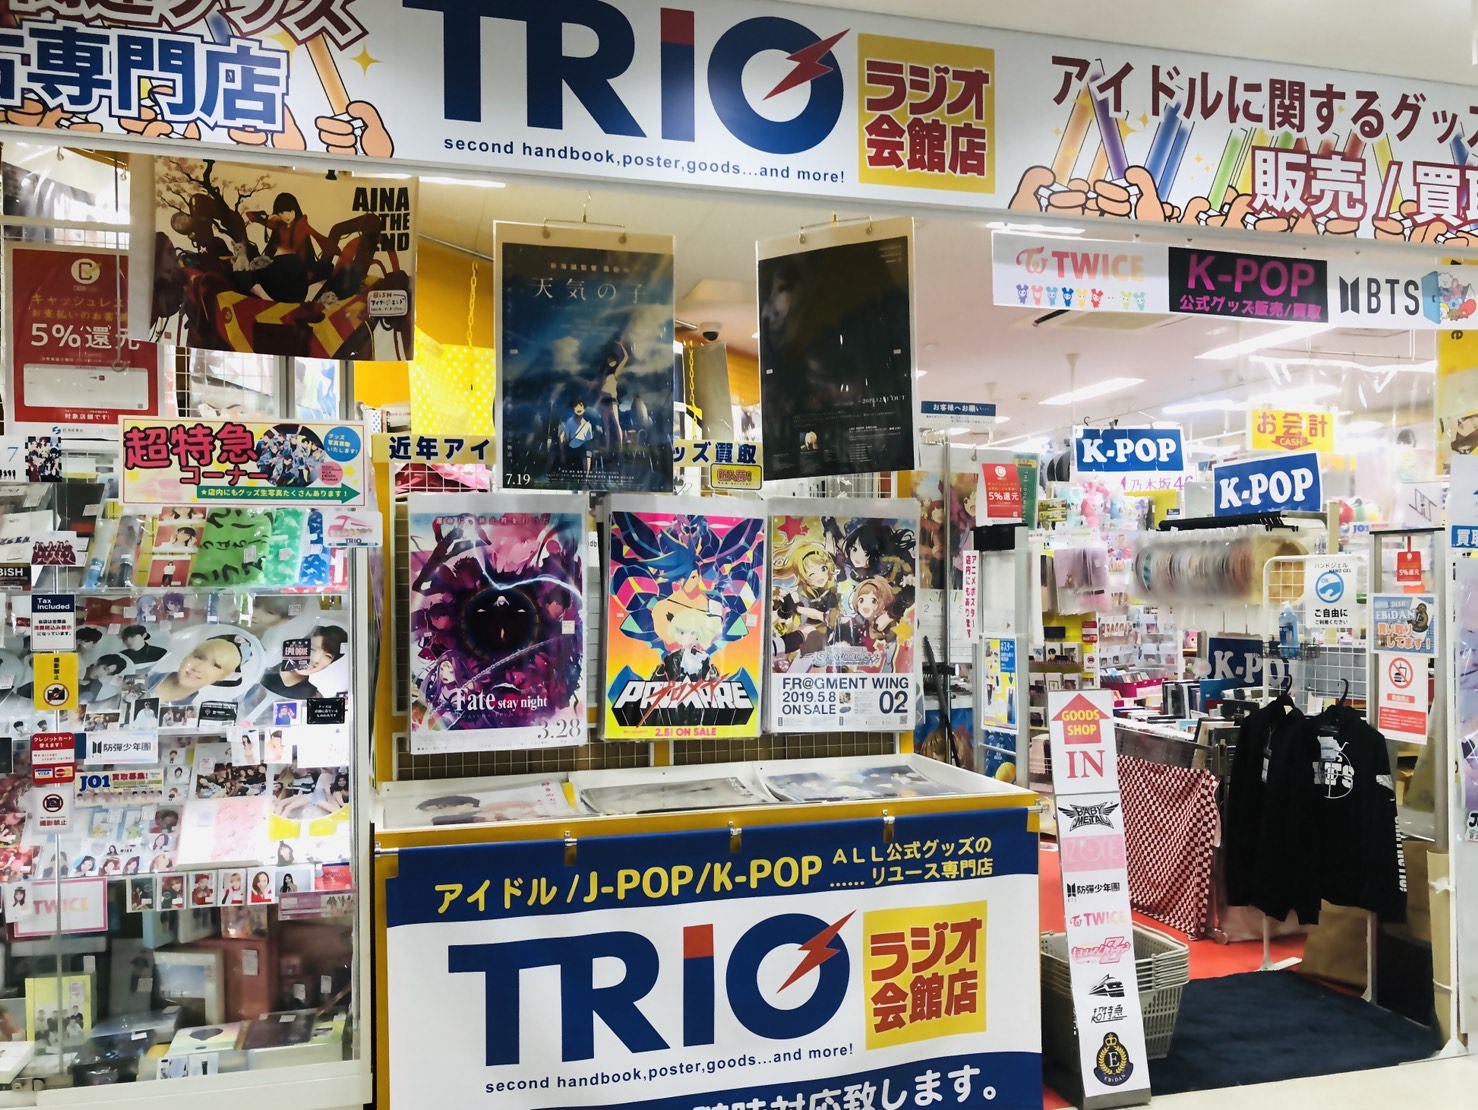 TRIO ラジオ会館店 | 秋葉原ラジオ会館